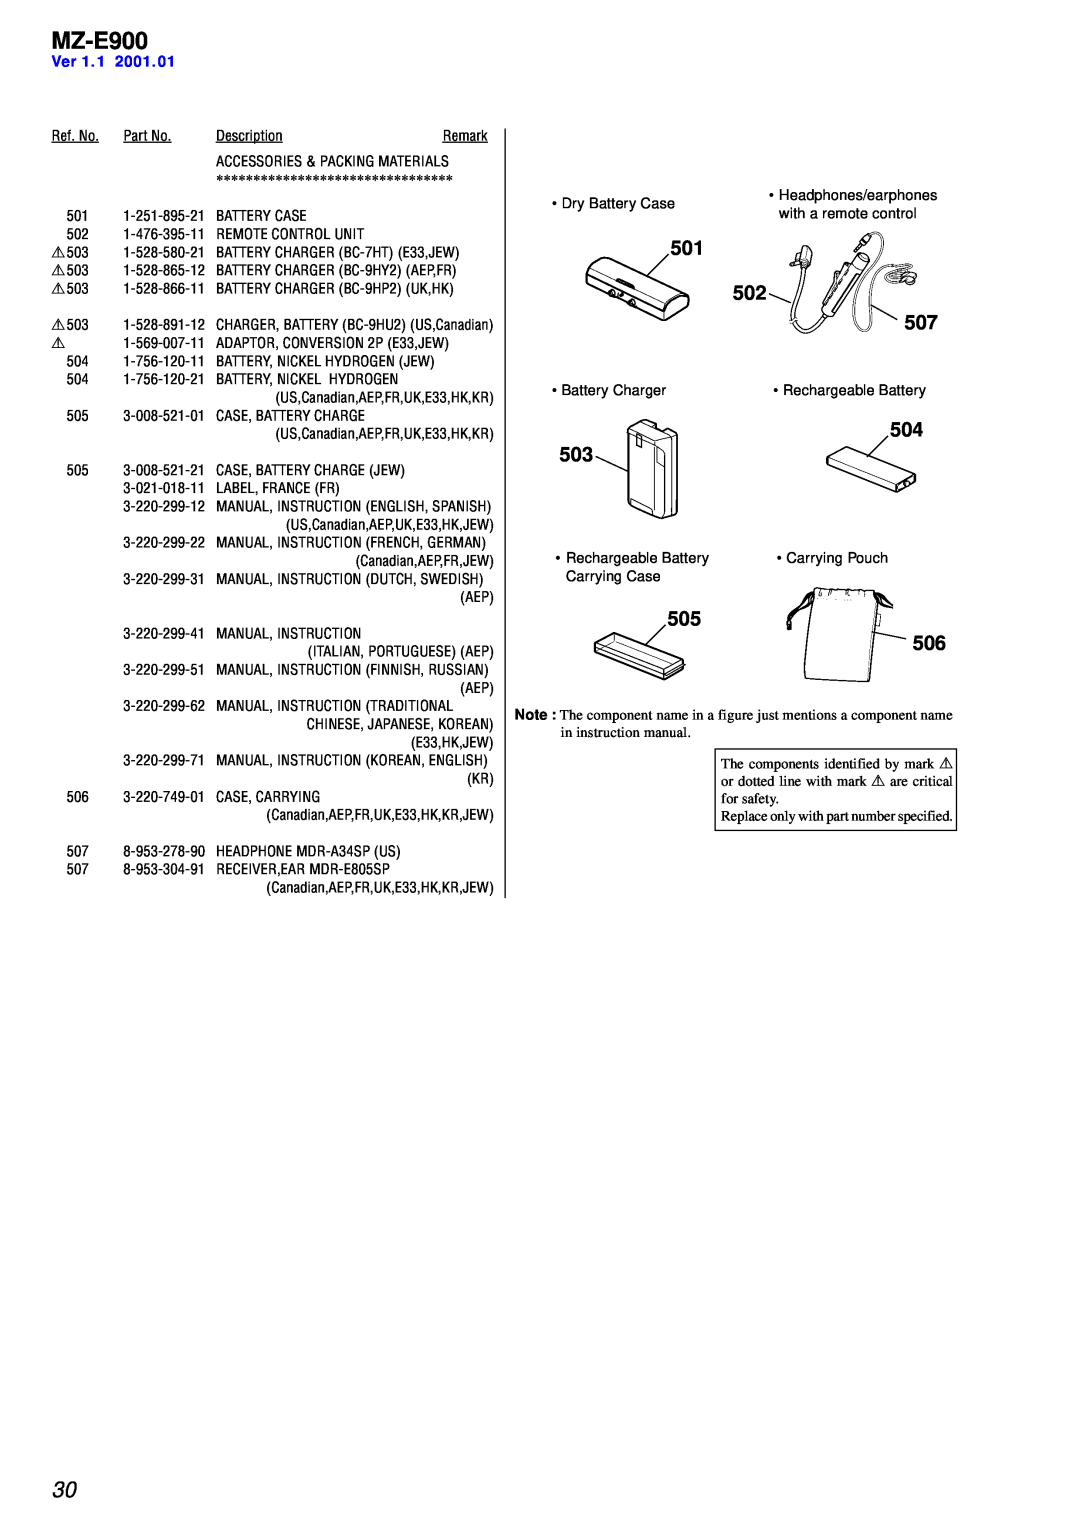 Sony MZ-E900 specifications 501, 504, 505, Ver 